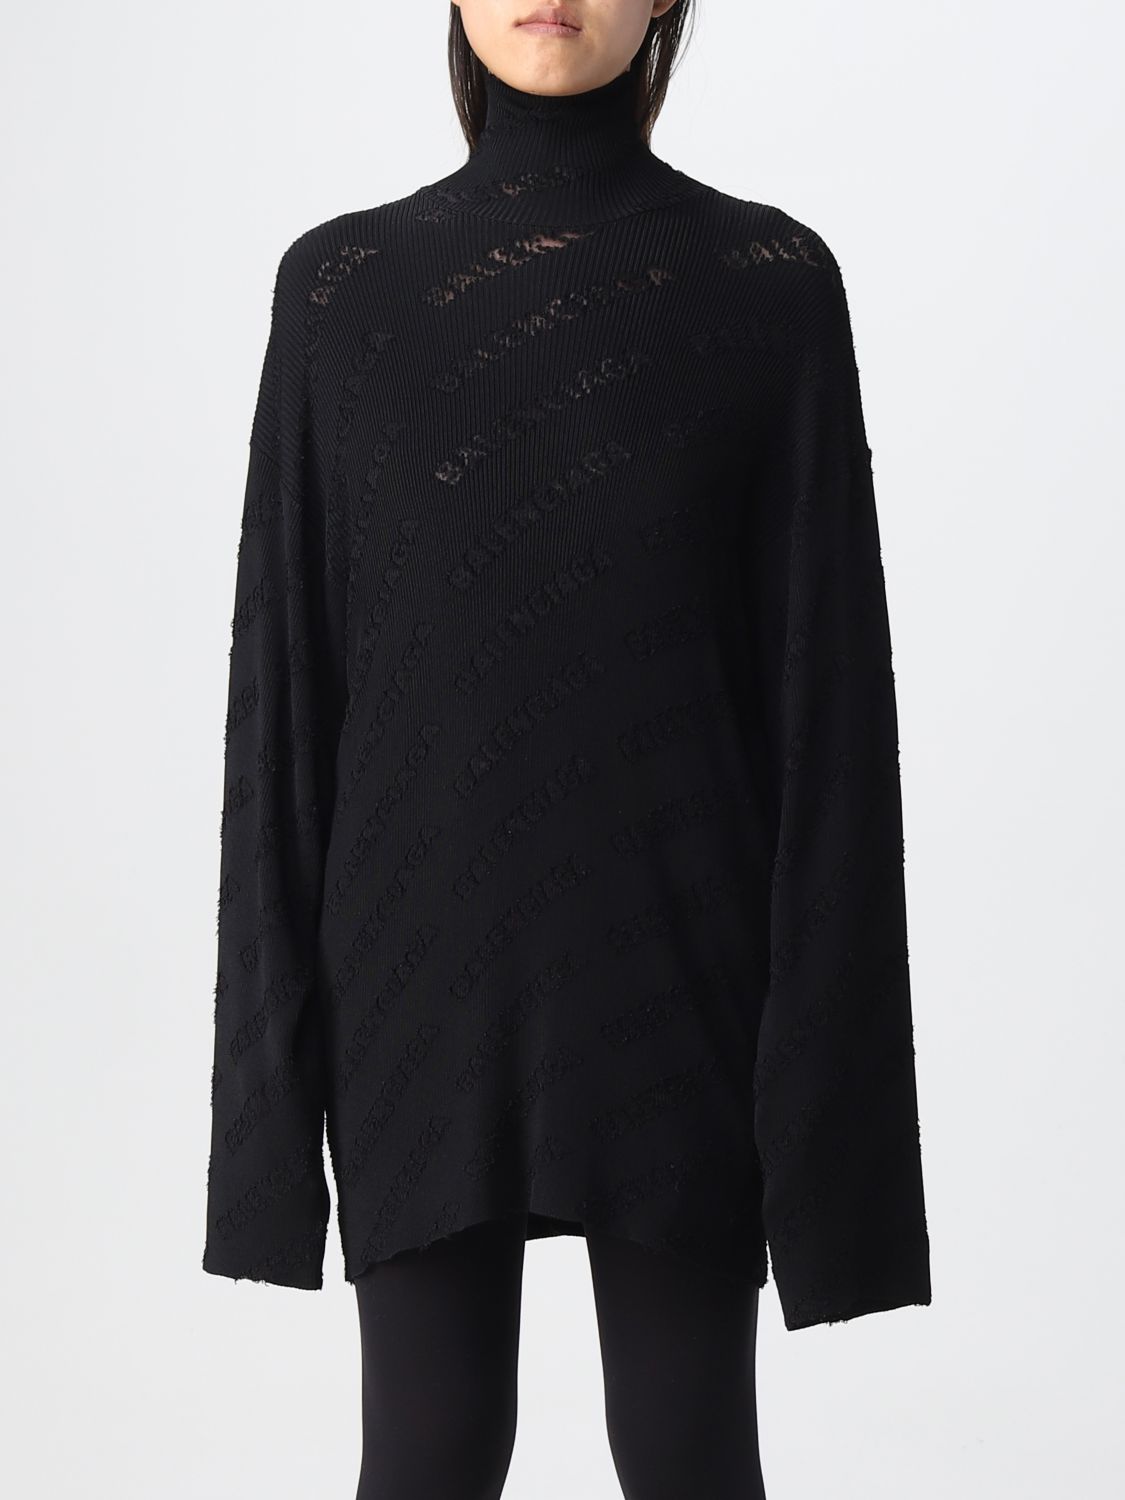 BALENCIAGA: sweater for woman - Black | Balenciaga sweater 719056 T5188 ...